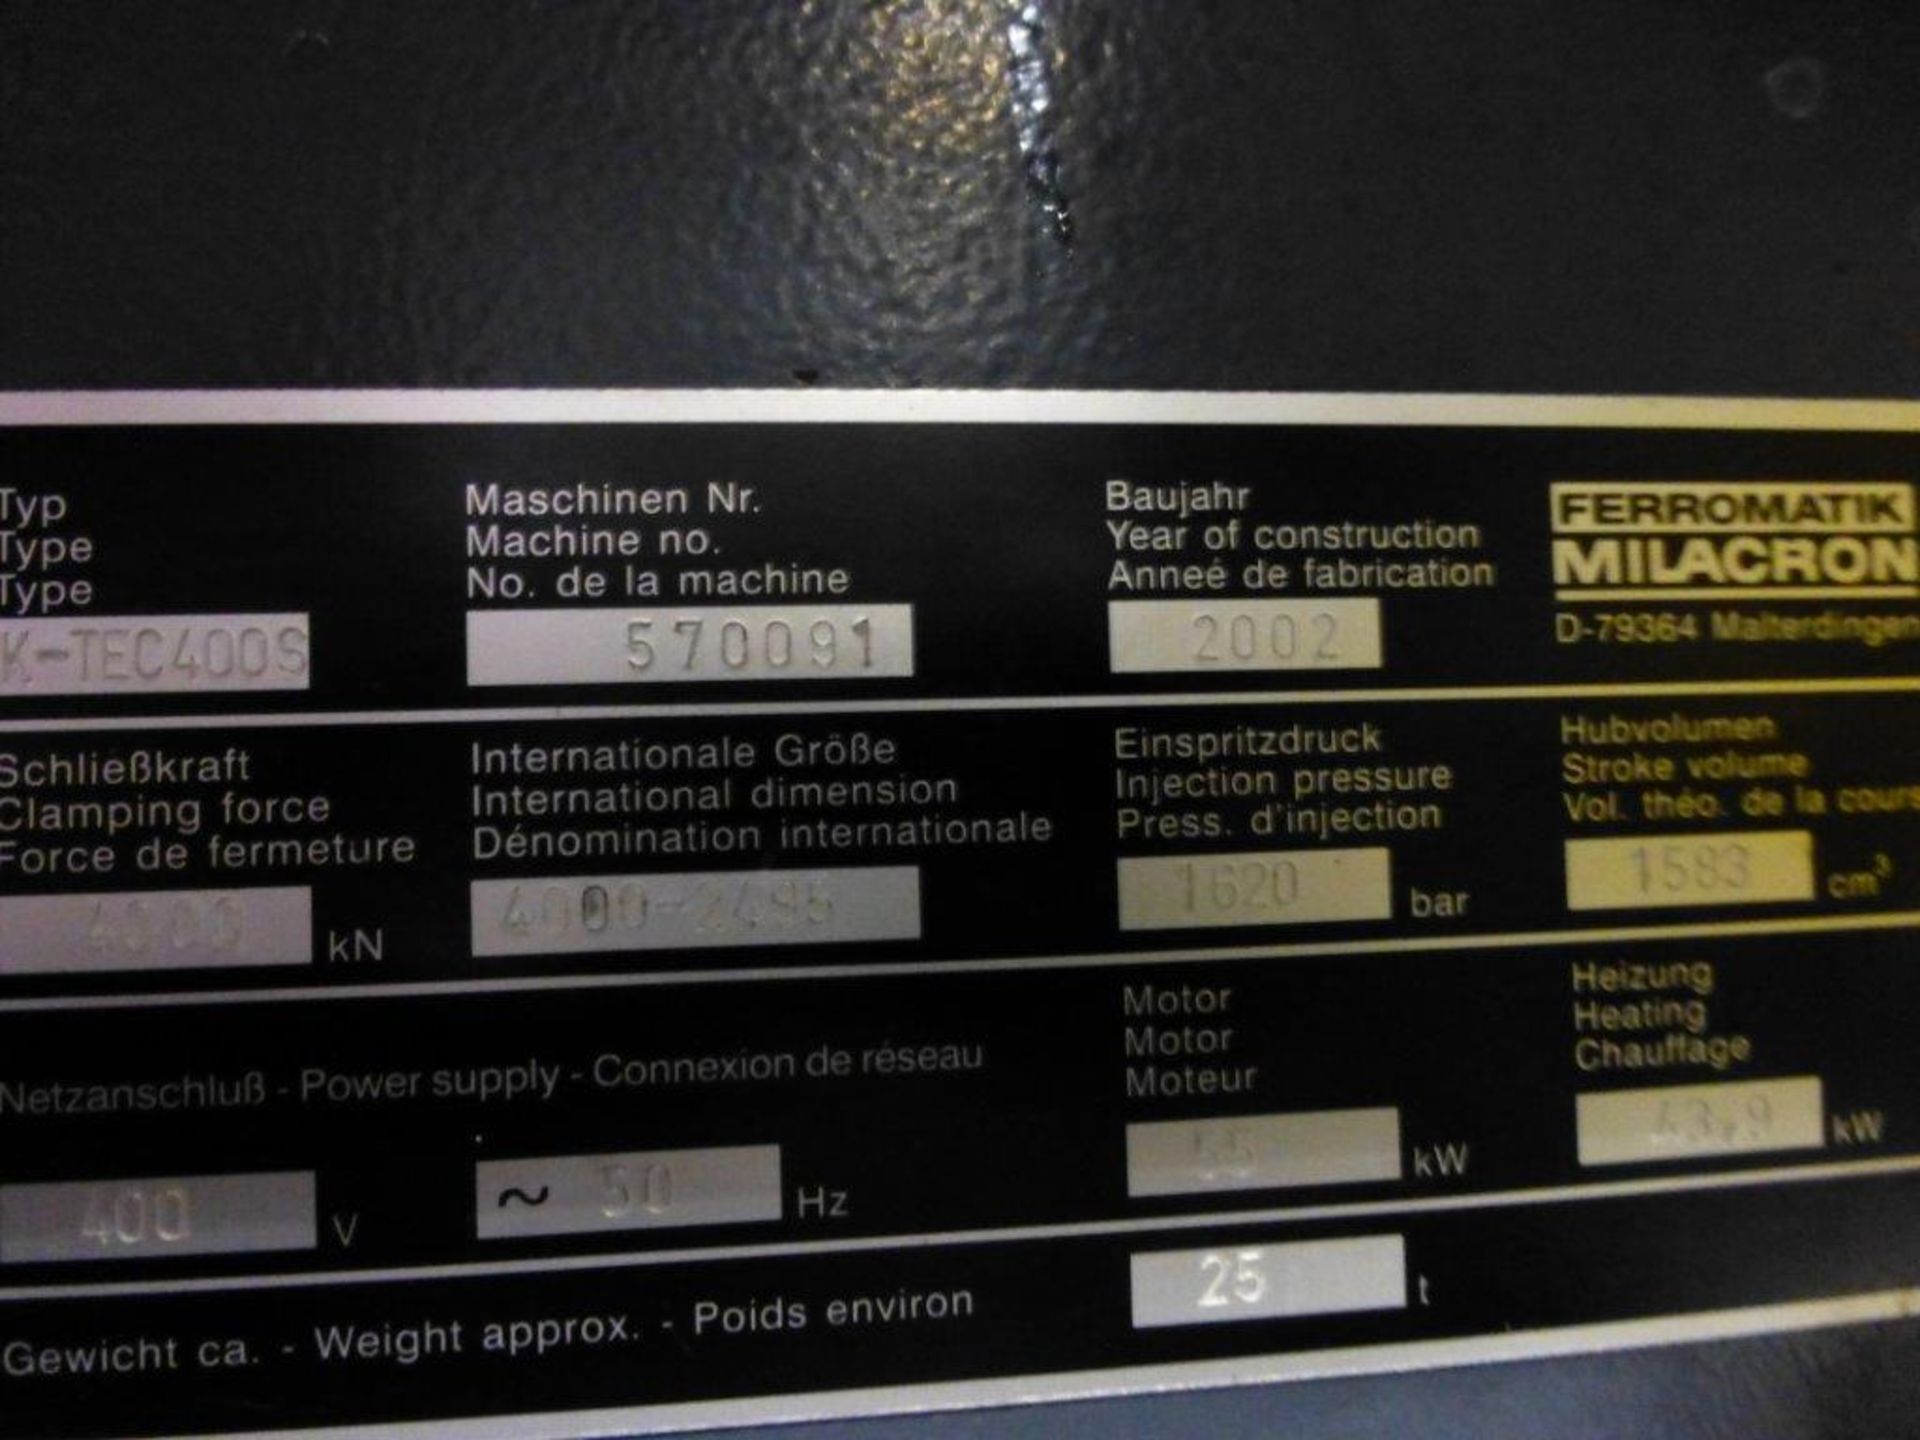 Ferromatik Milacron Ktec 400S CNC Plastic Injection Moulding Machine Serial No: 570091 (2002) with - Image 4 of 4